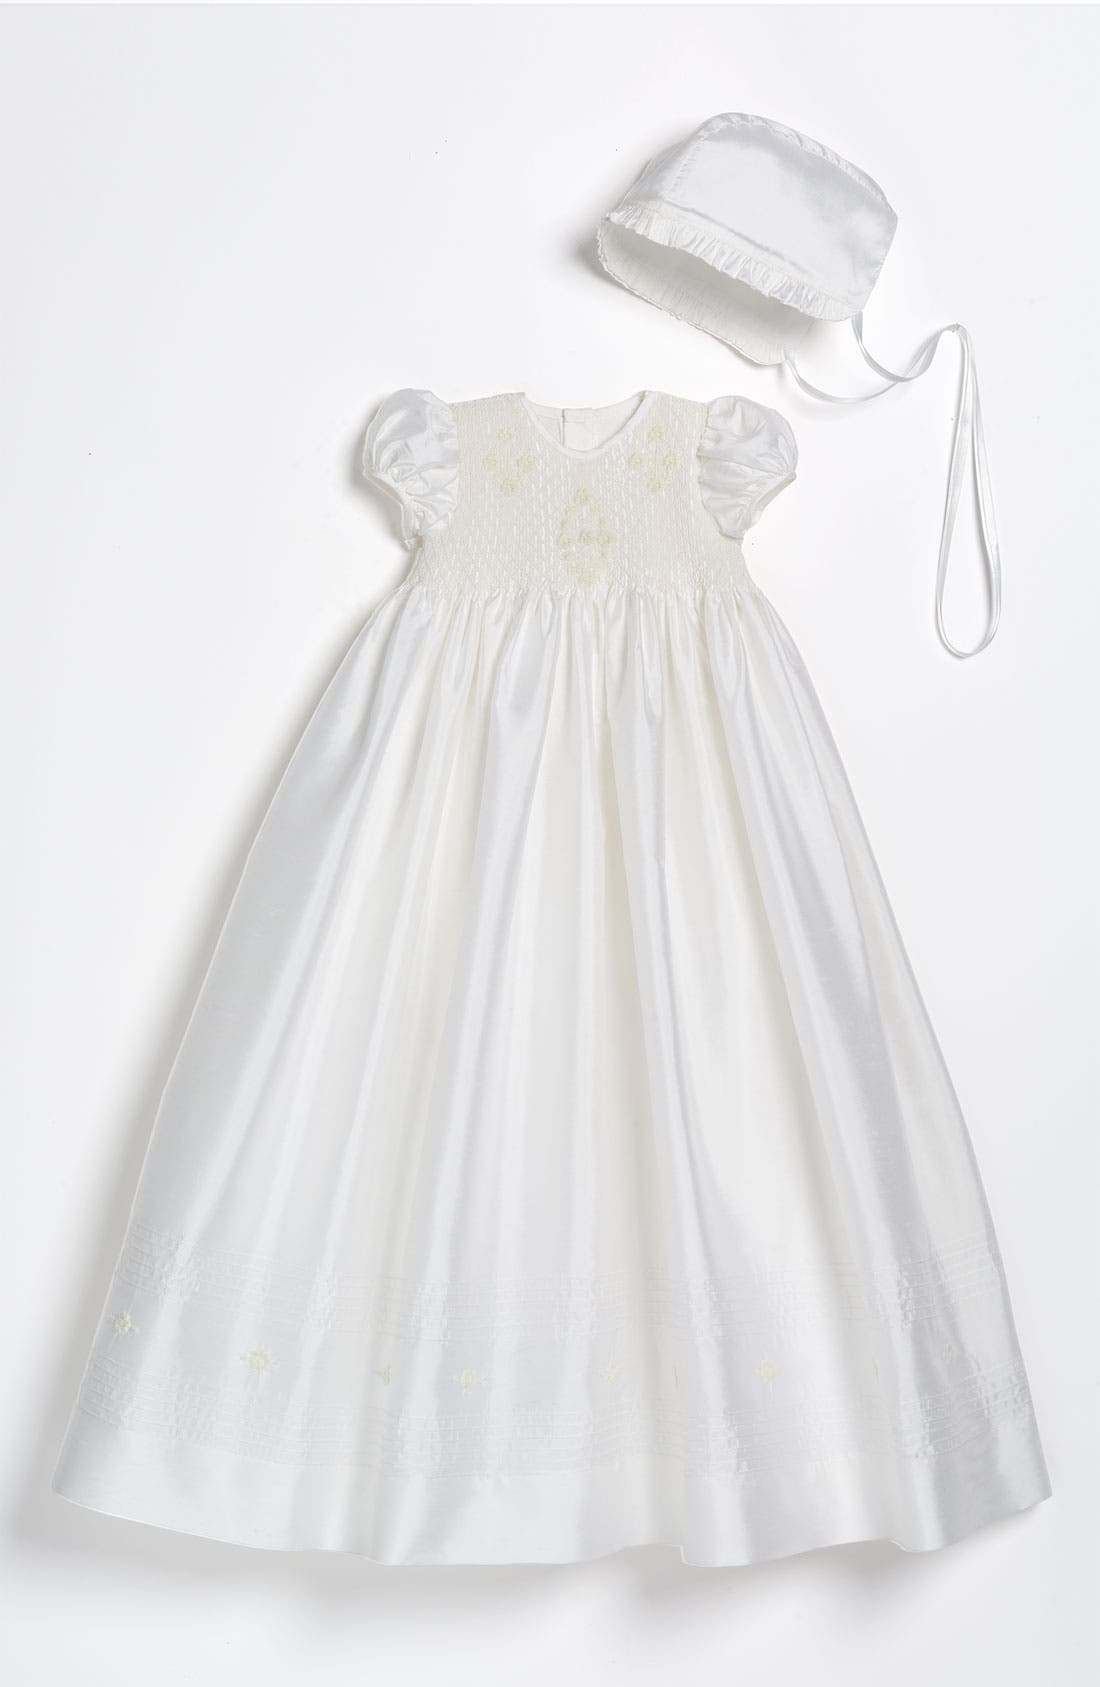 baby girl in white dress